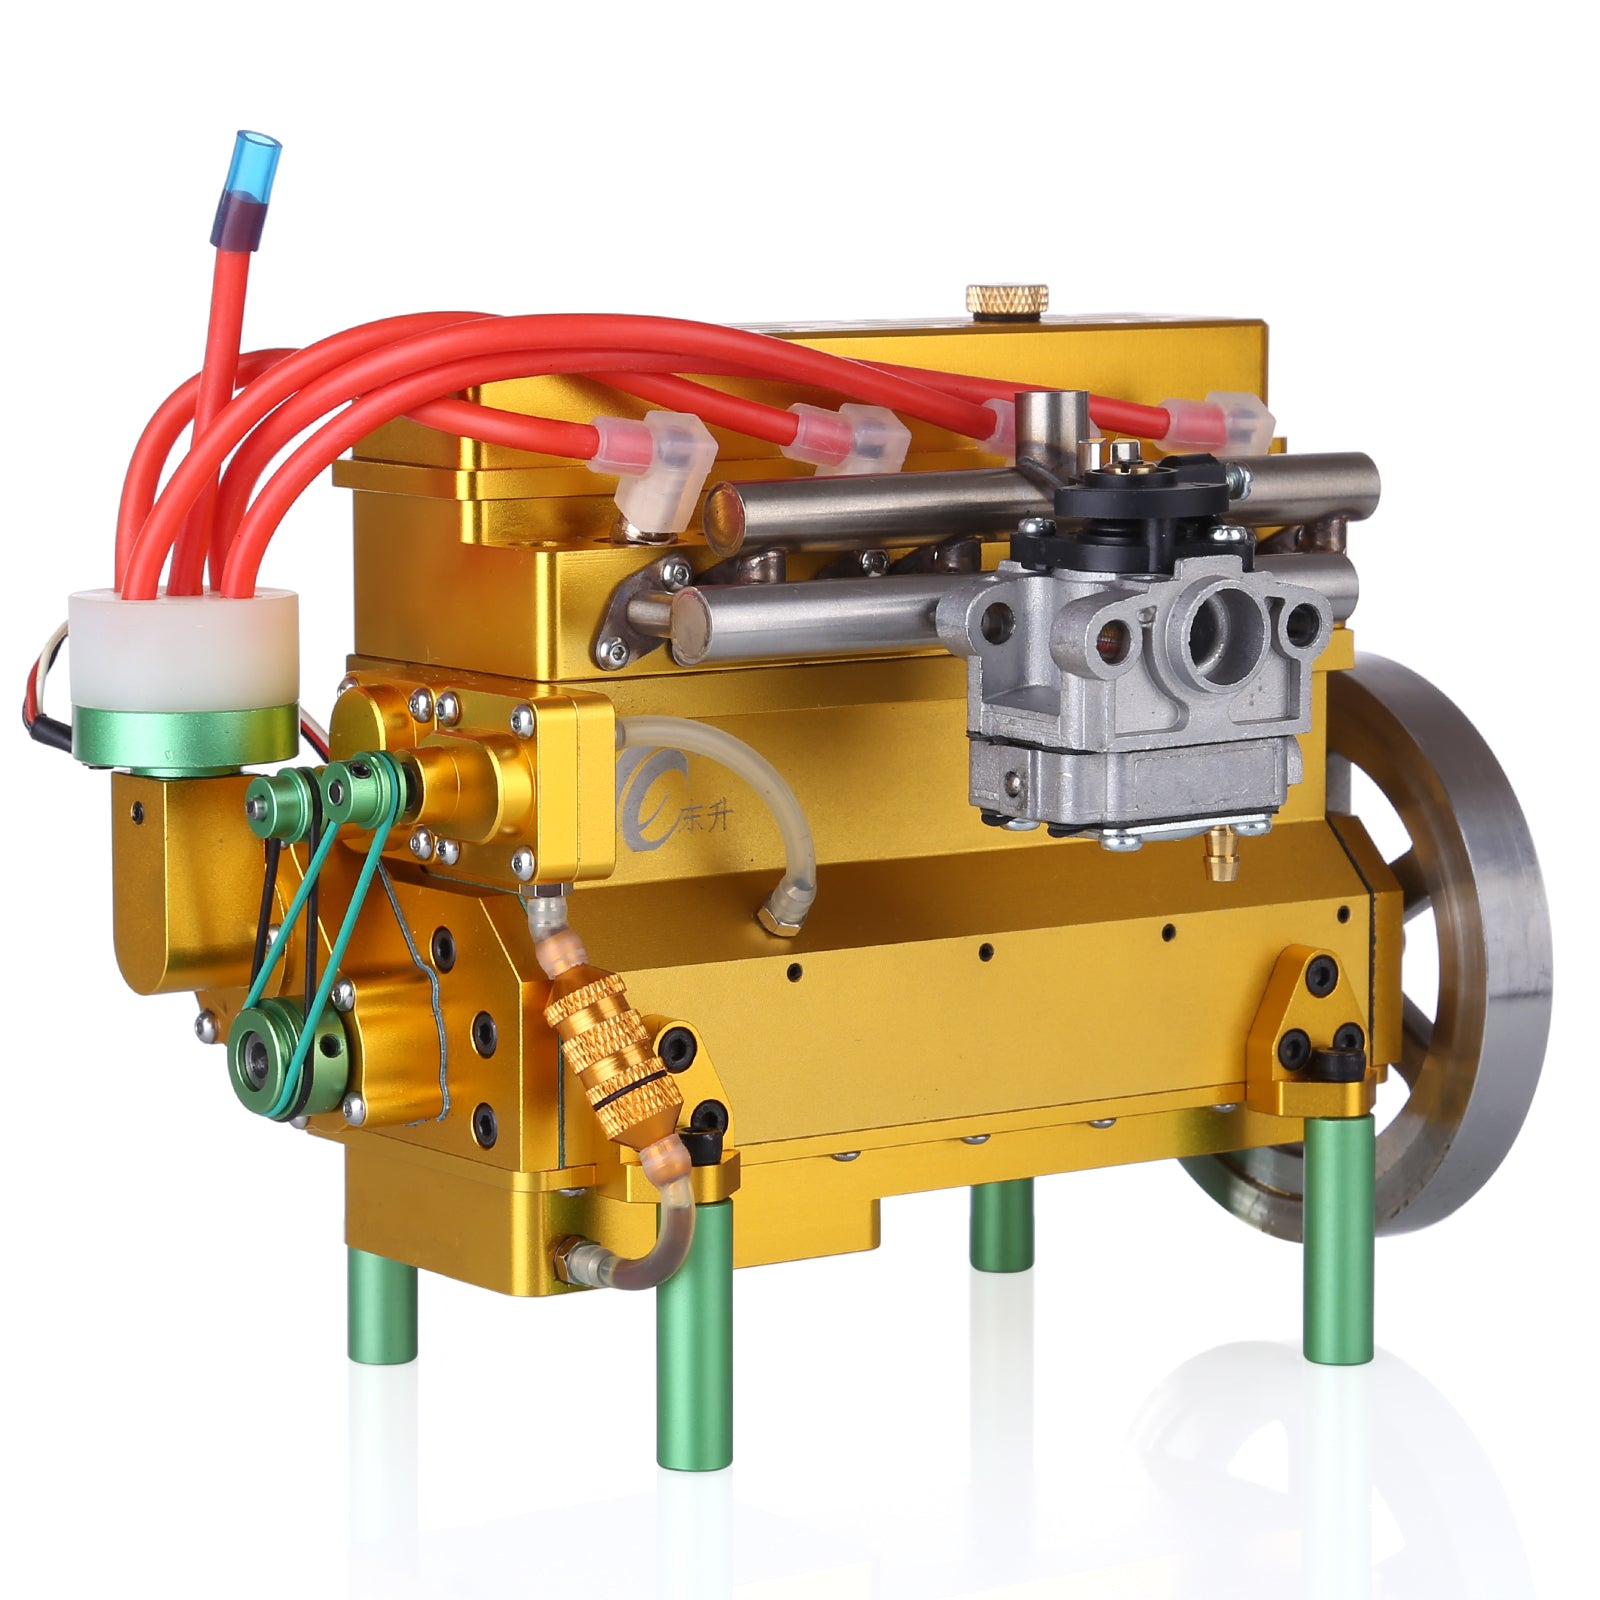 Enginediy 32cc Inline 4 Cylinder Water Cooled Gasoline Engine - How to Make a Generator with 4 Cylinder Gasoline Engine